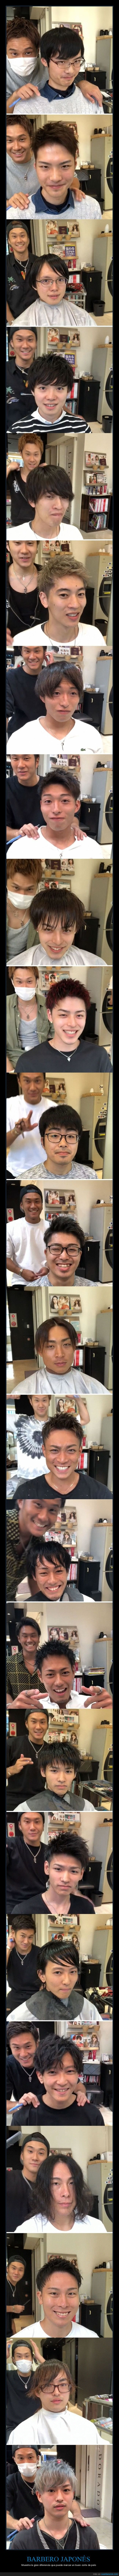 barber,peluquero,japonés,cortes de pelo,antes,después